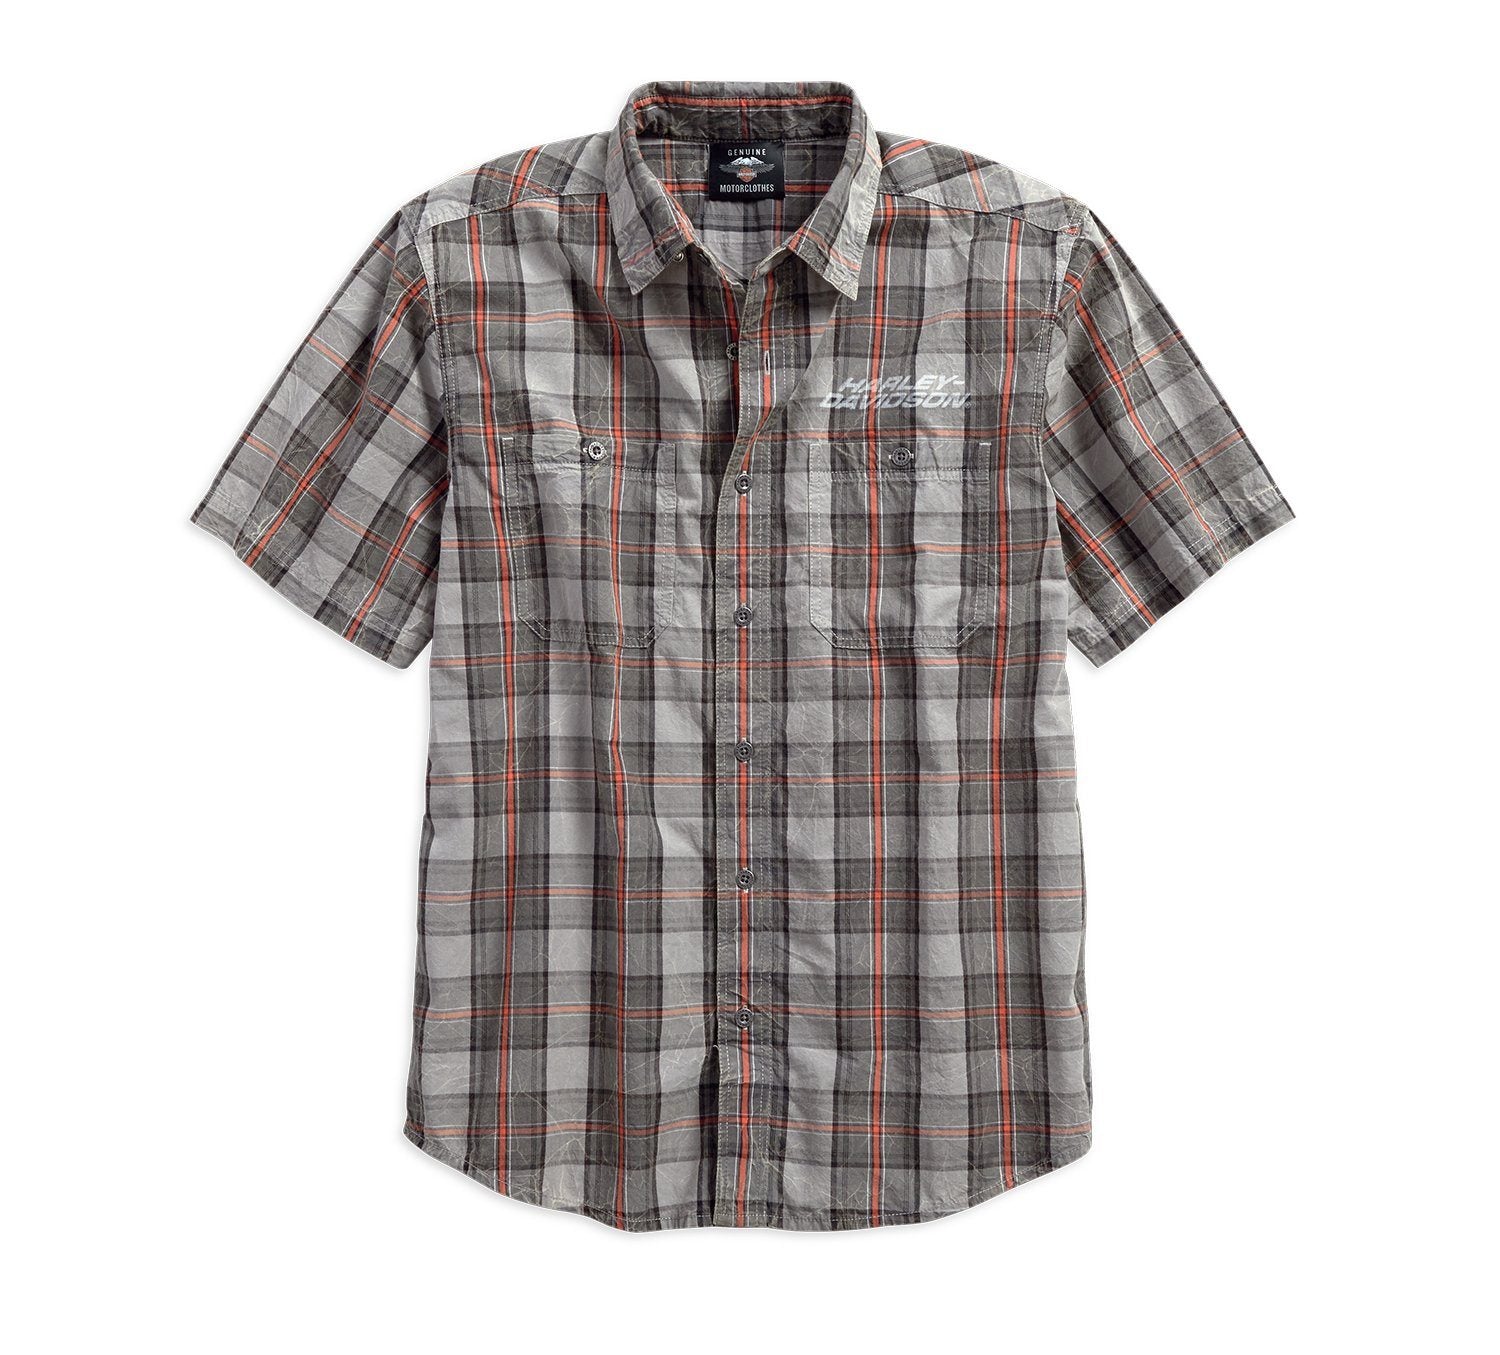 Harley-Davidson® Men's Distressed Washed Plaid Short Sleeve Shirt 96119-18VM